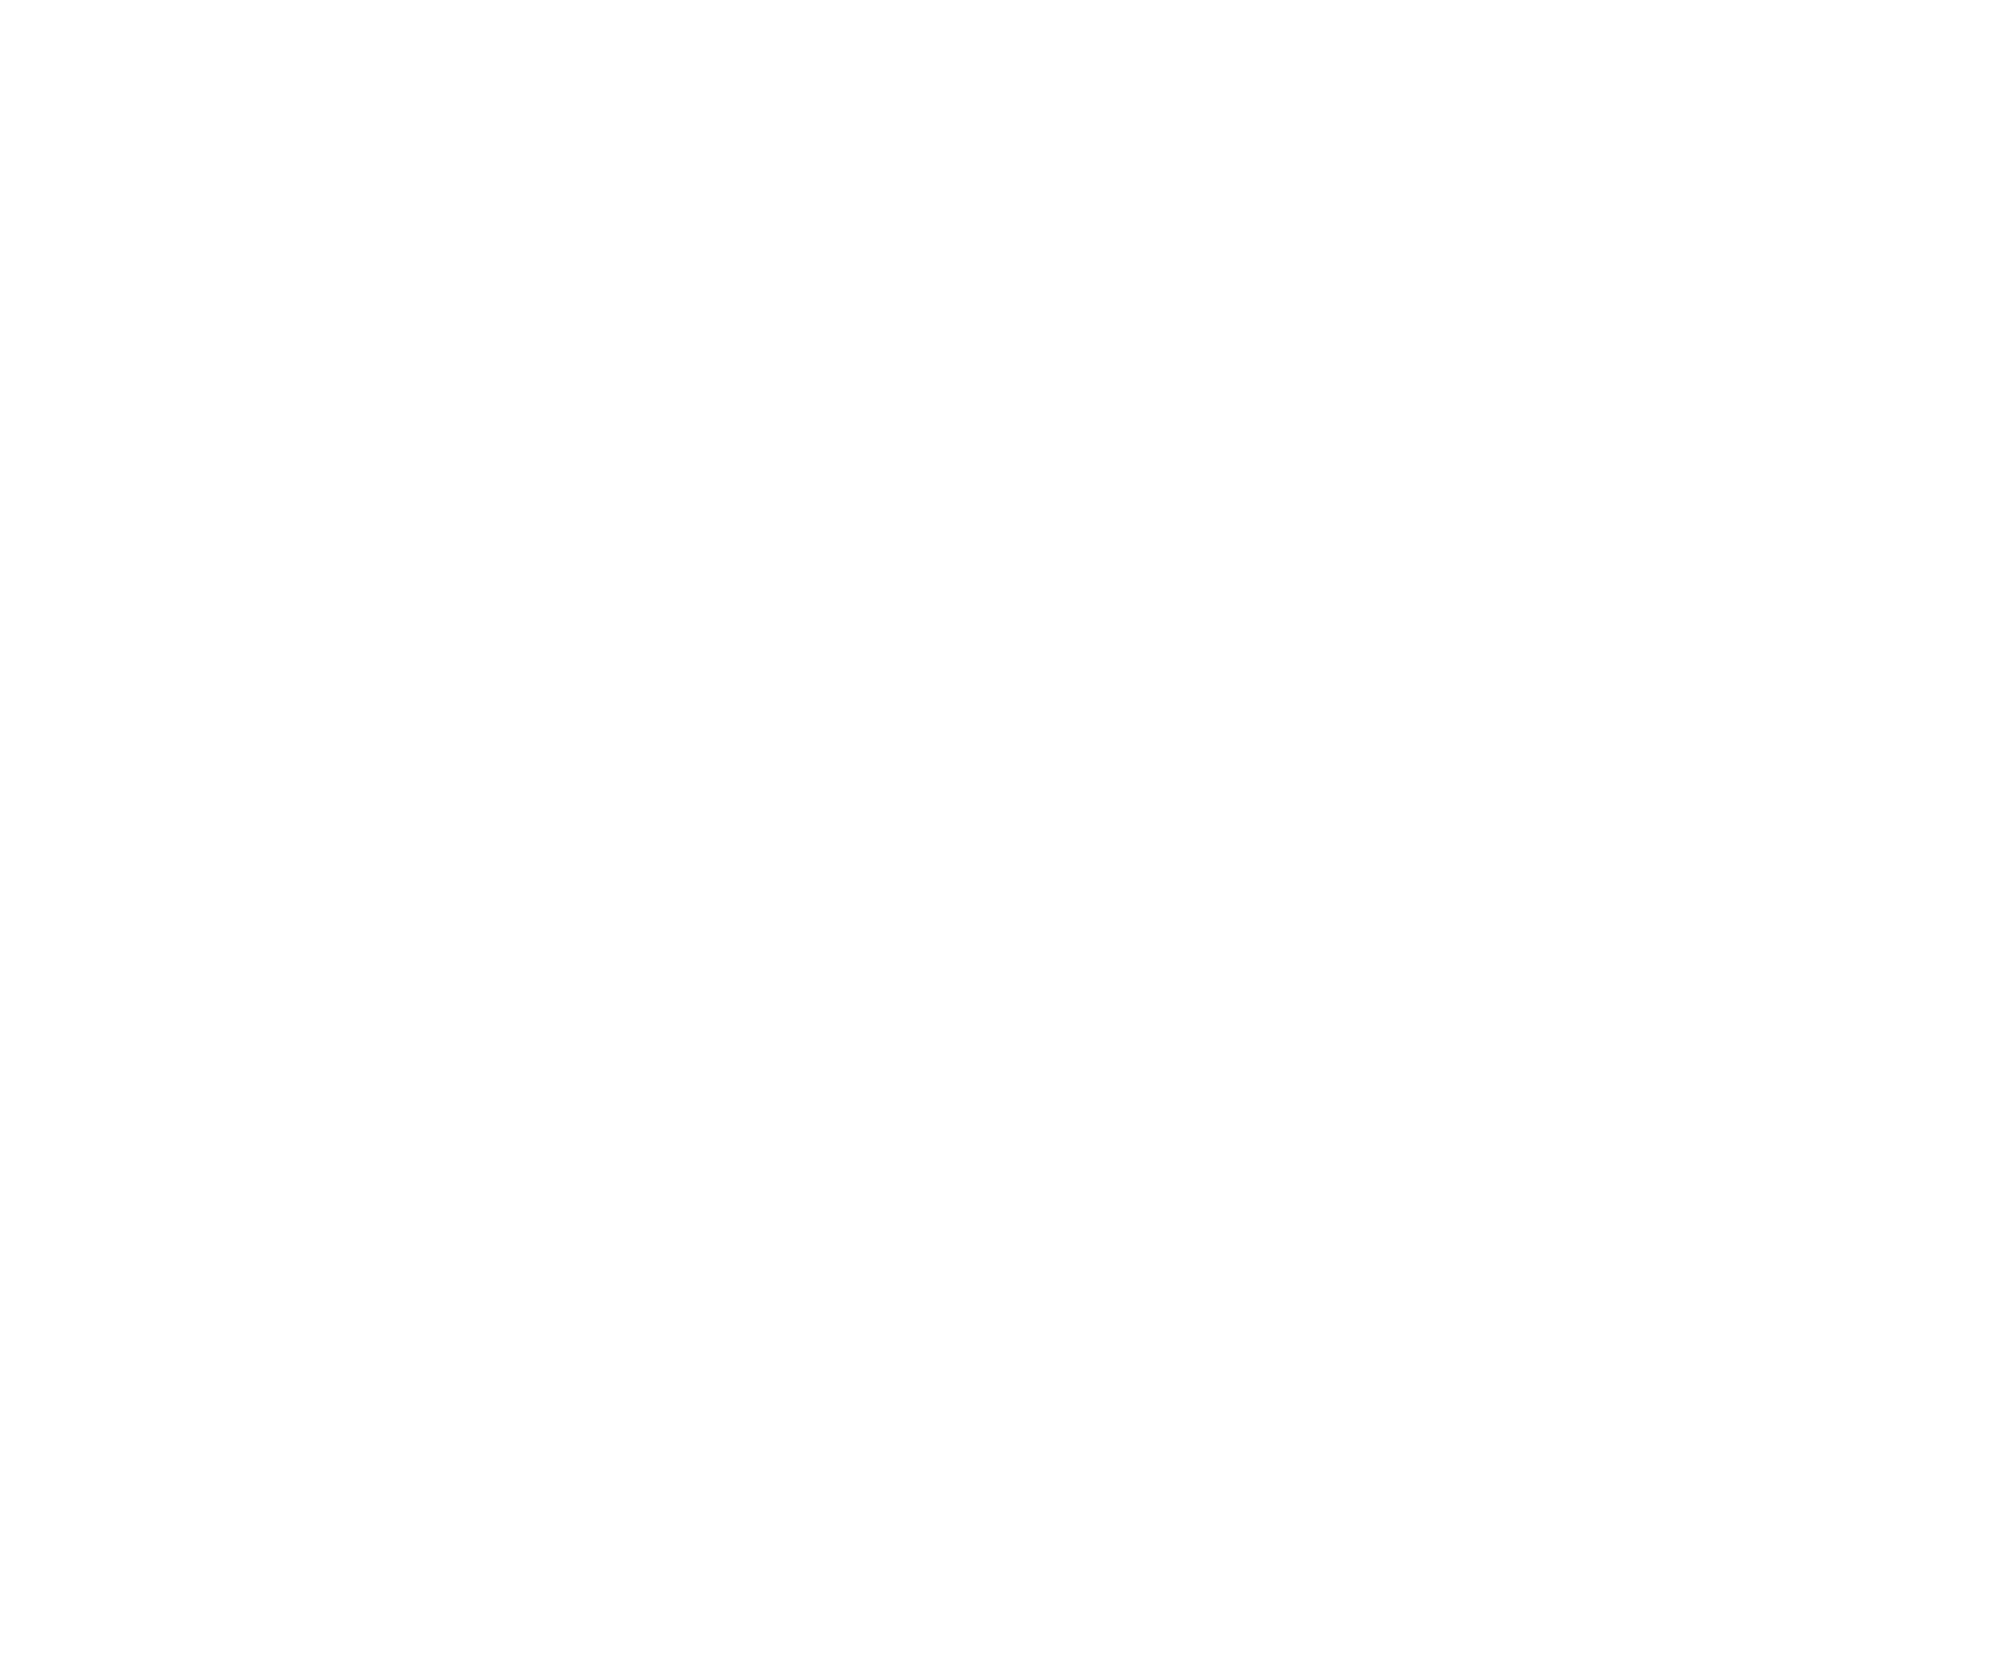 Gulf land property developers - Hero Logo